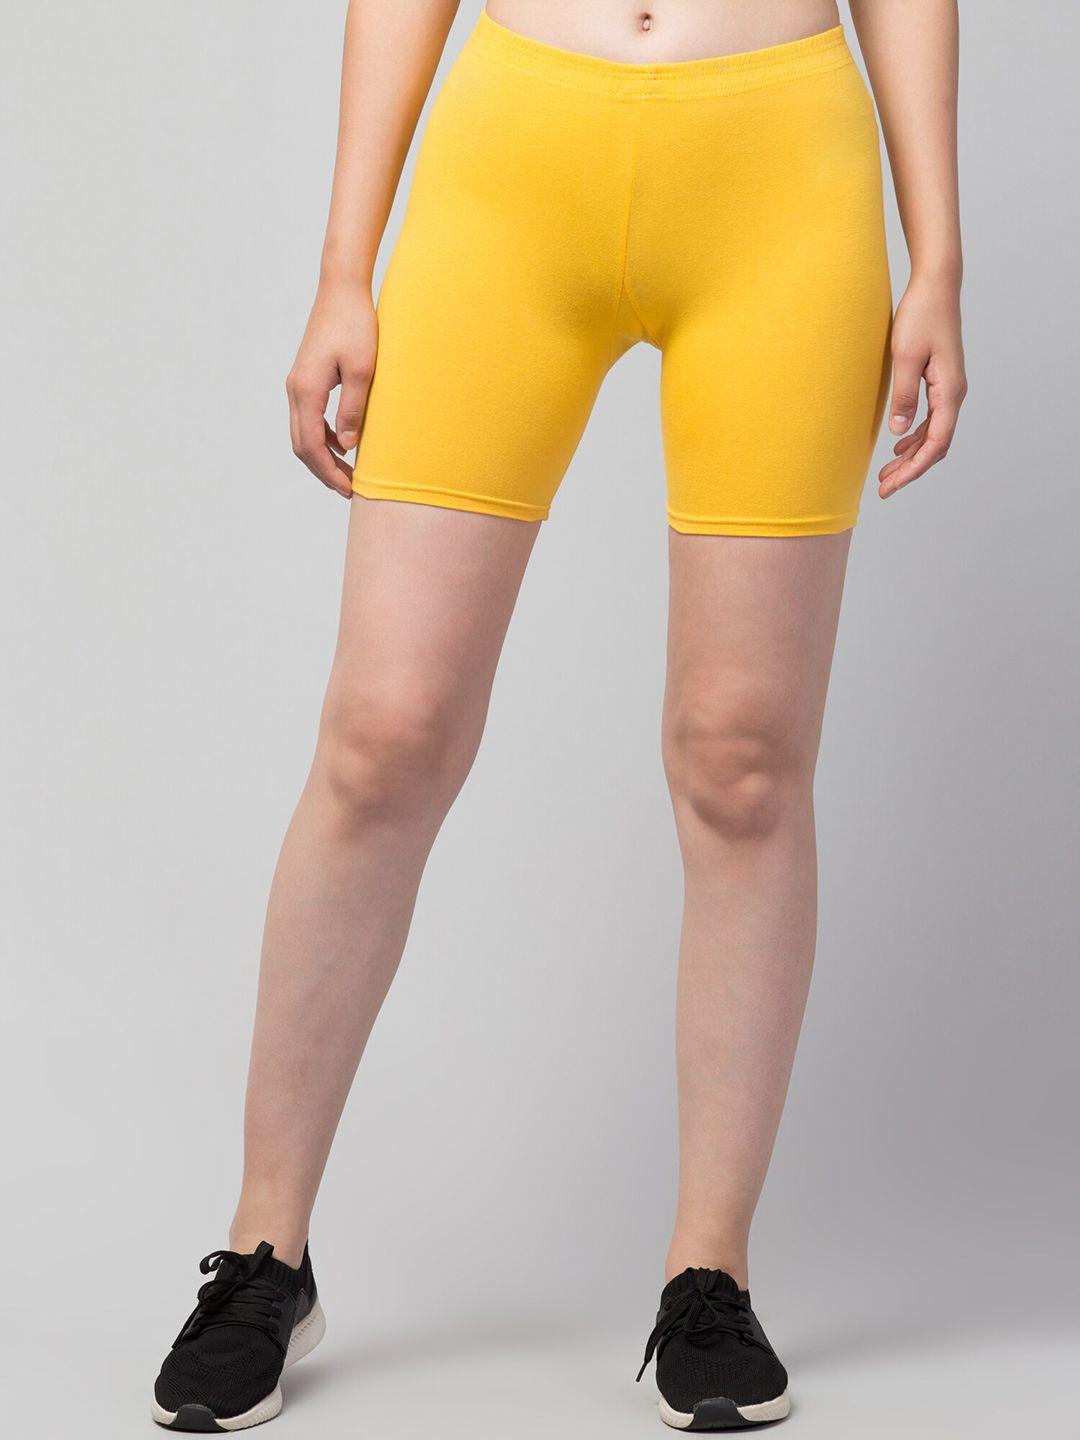 apraa & parma women slim fit pure cotton cycling sports shorts